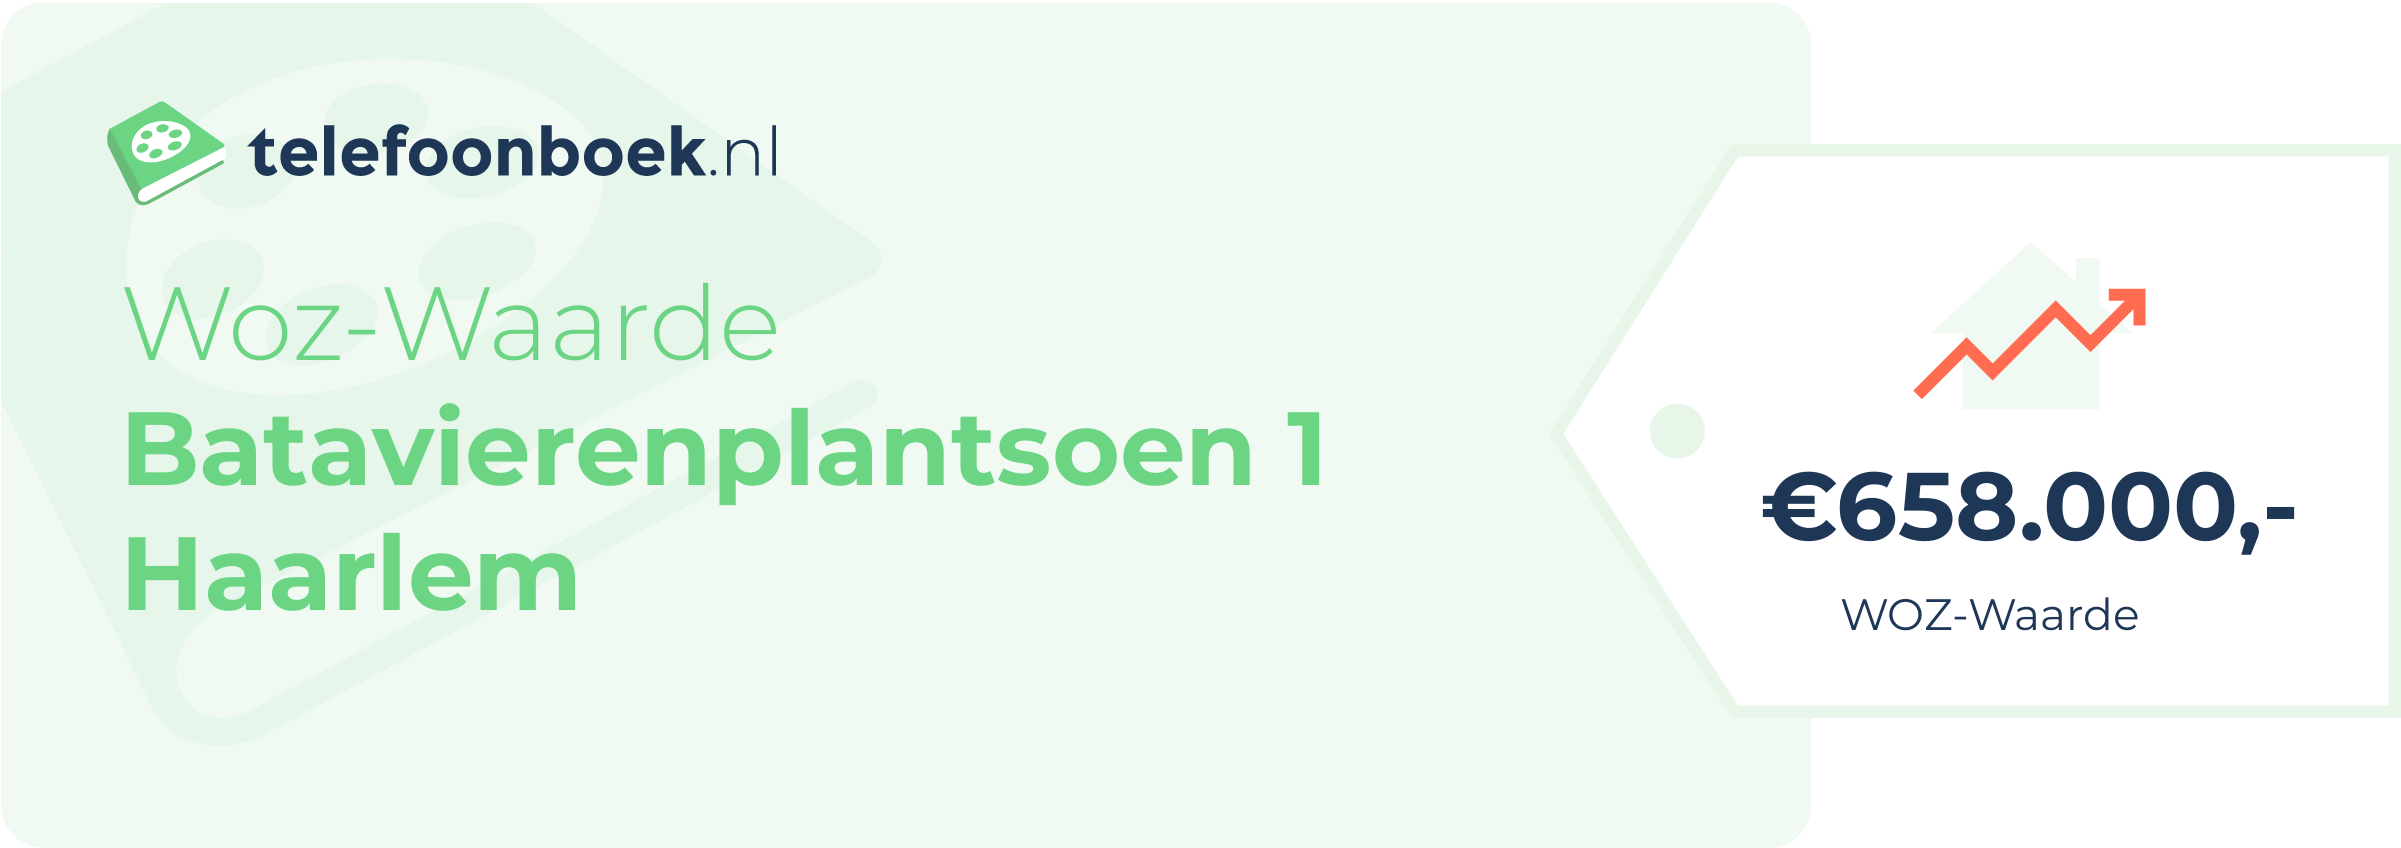 WOZ-waarde Batavierenplantsoen 1 Haarlem